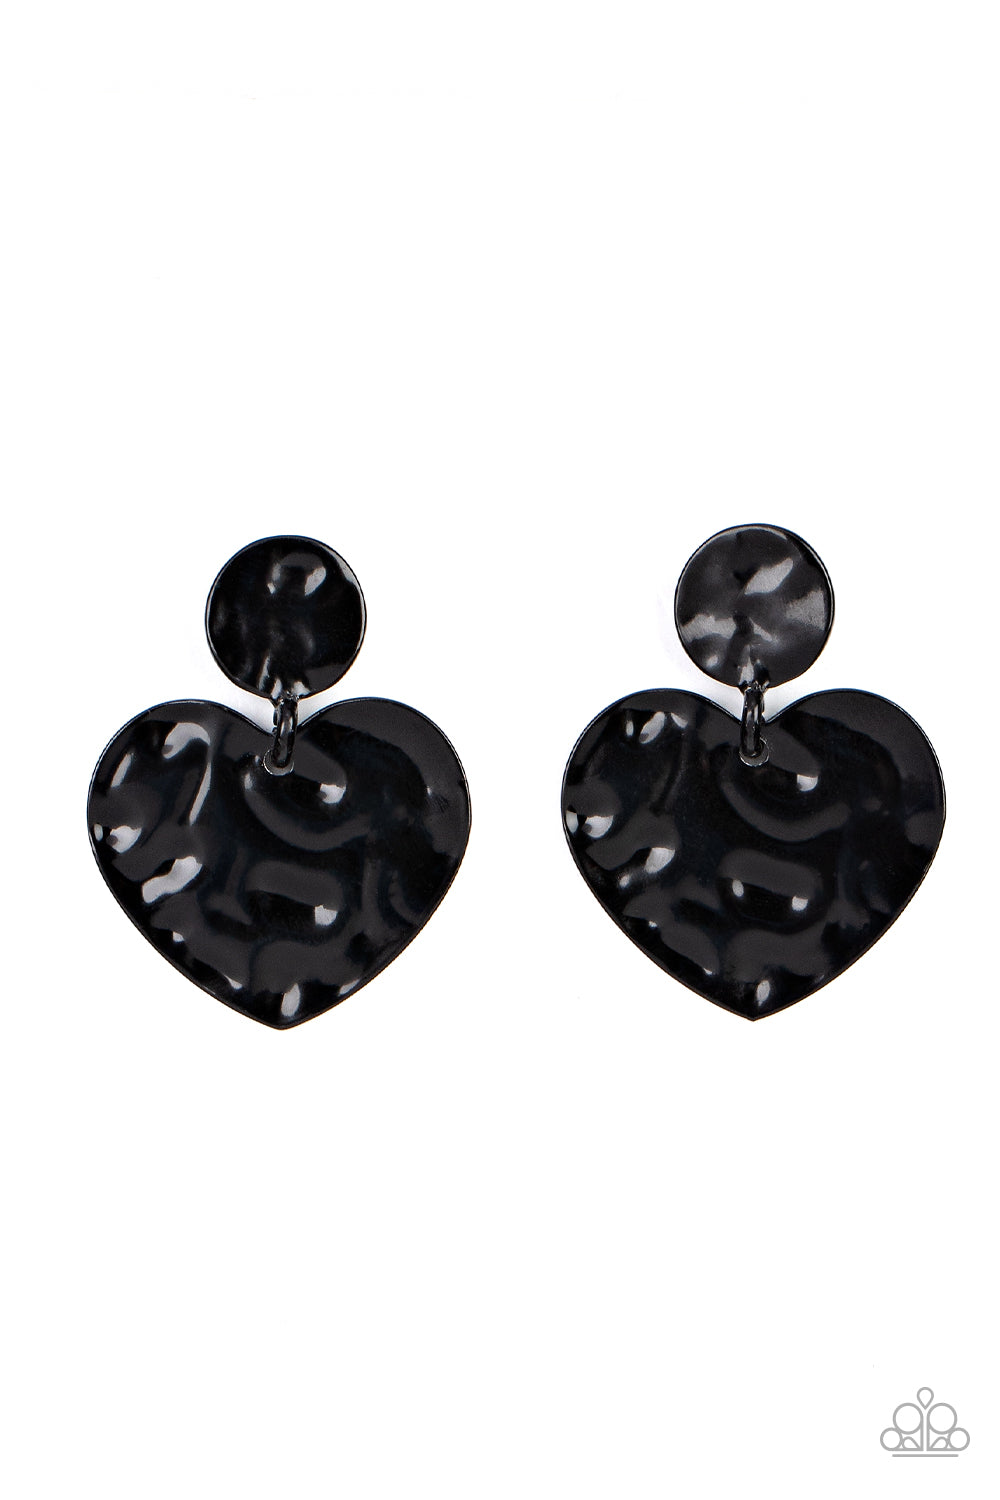 Paparazzi Accessories - Just a Little Crush #E578 - Black Earrings